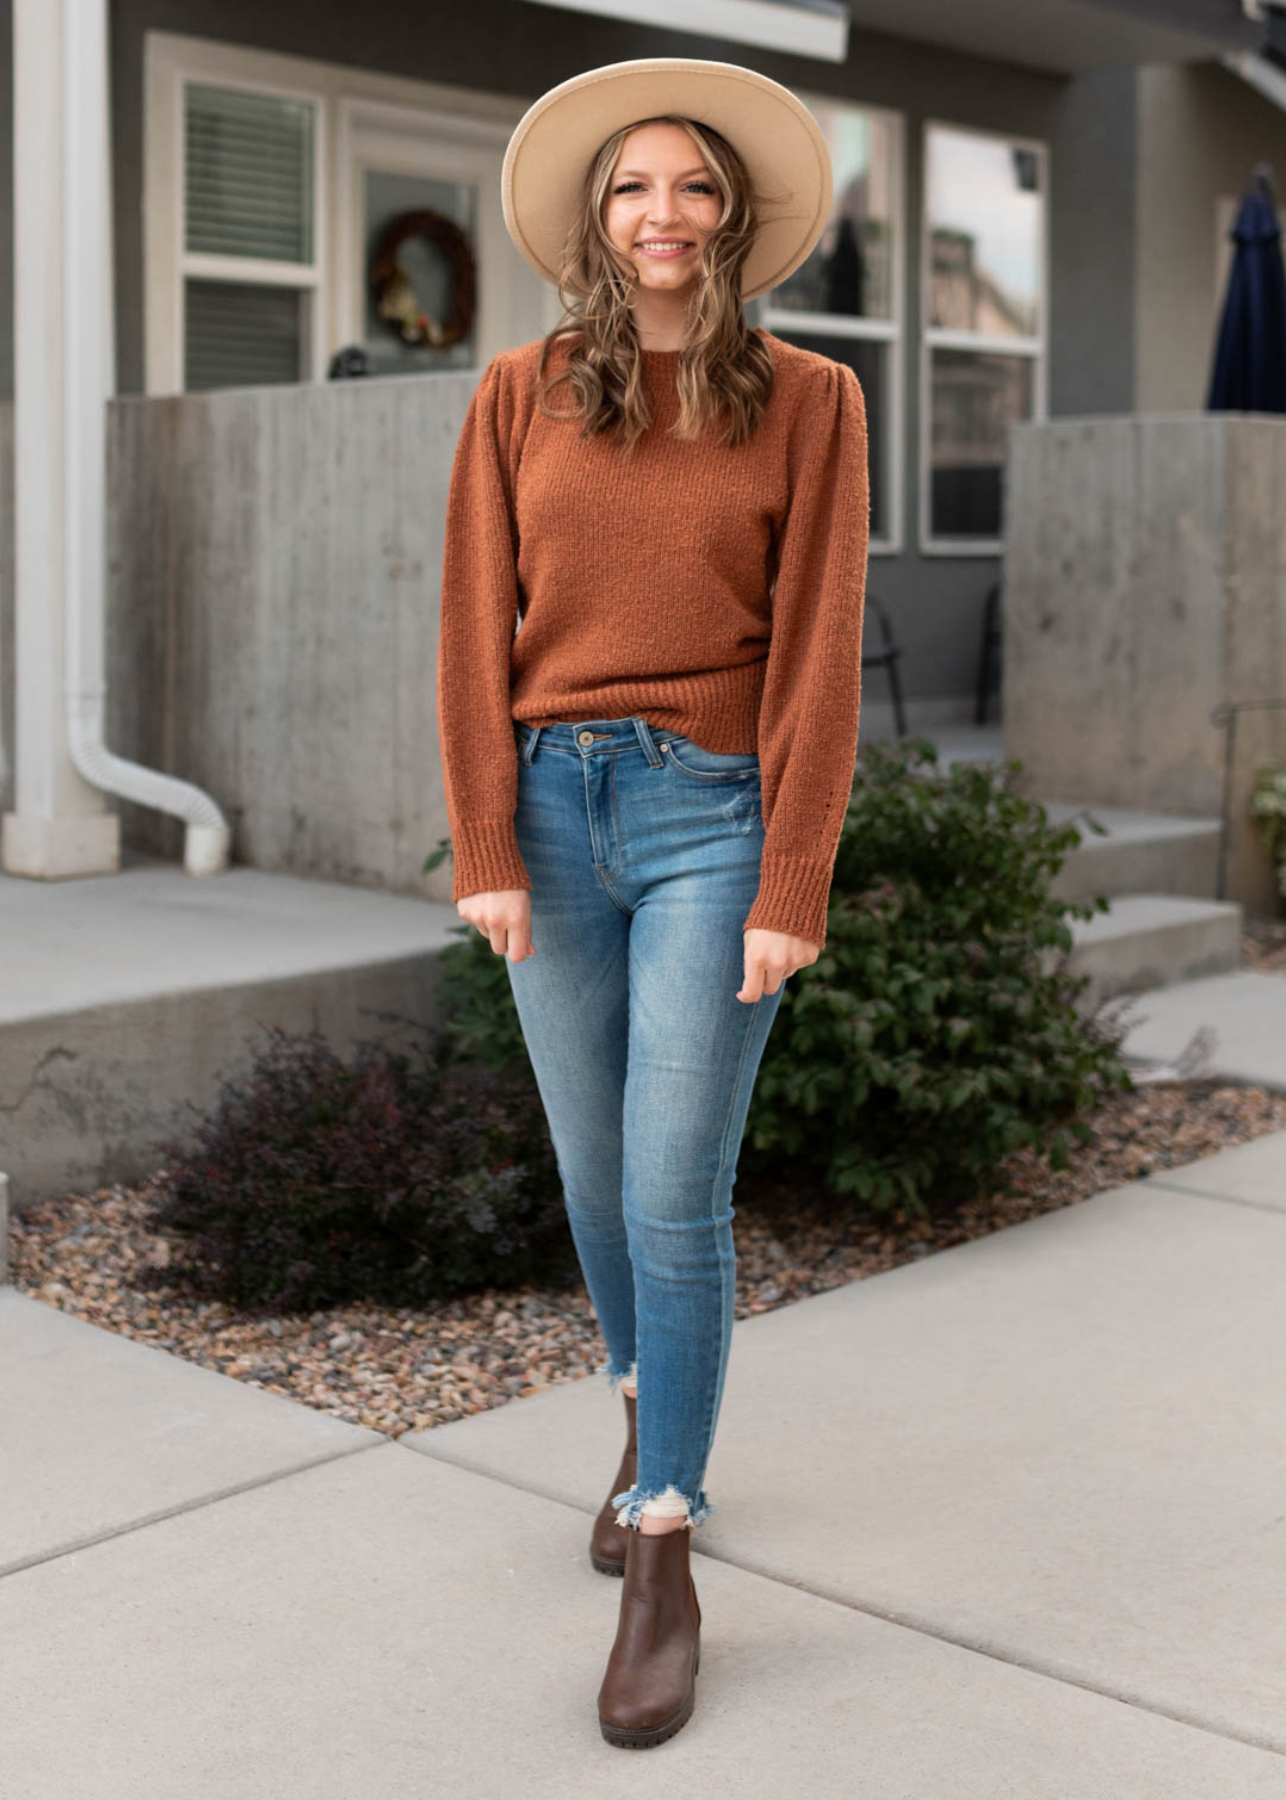 Long sleeve camel knit sweater